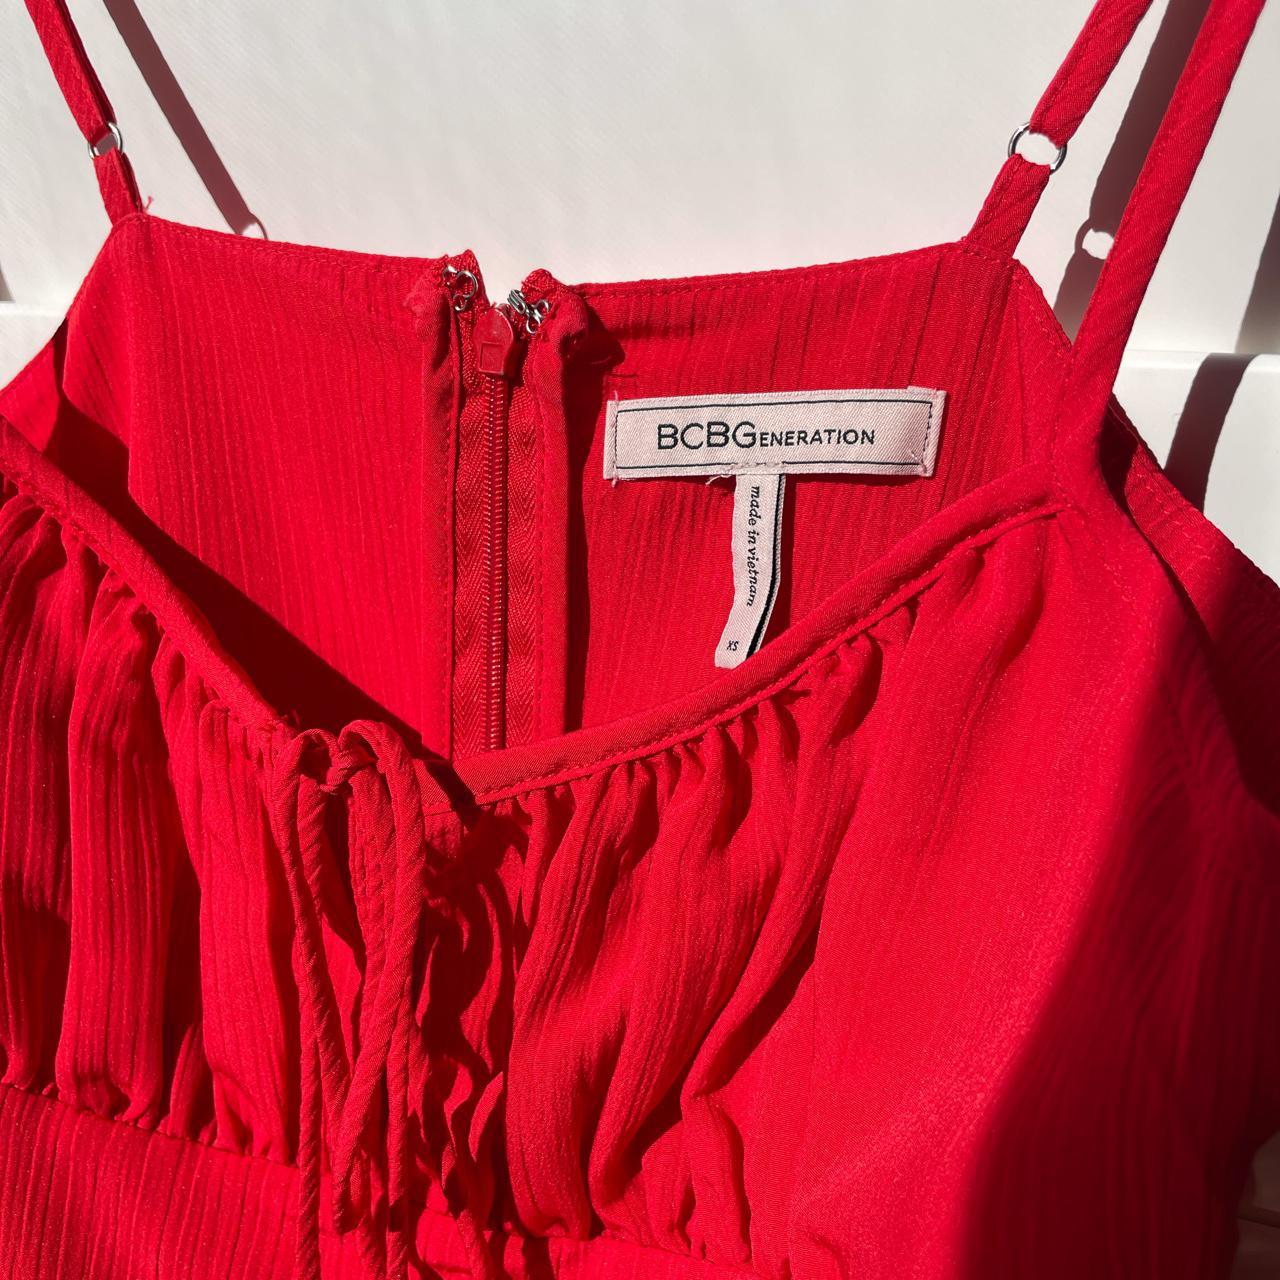 Product Image 3 - BCBGeneration red mini dress.
Adjustable straps.